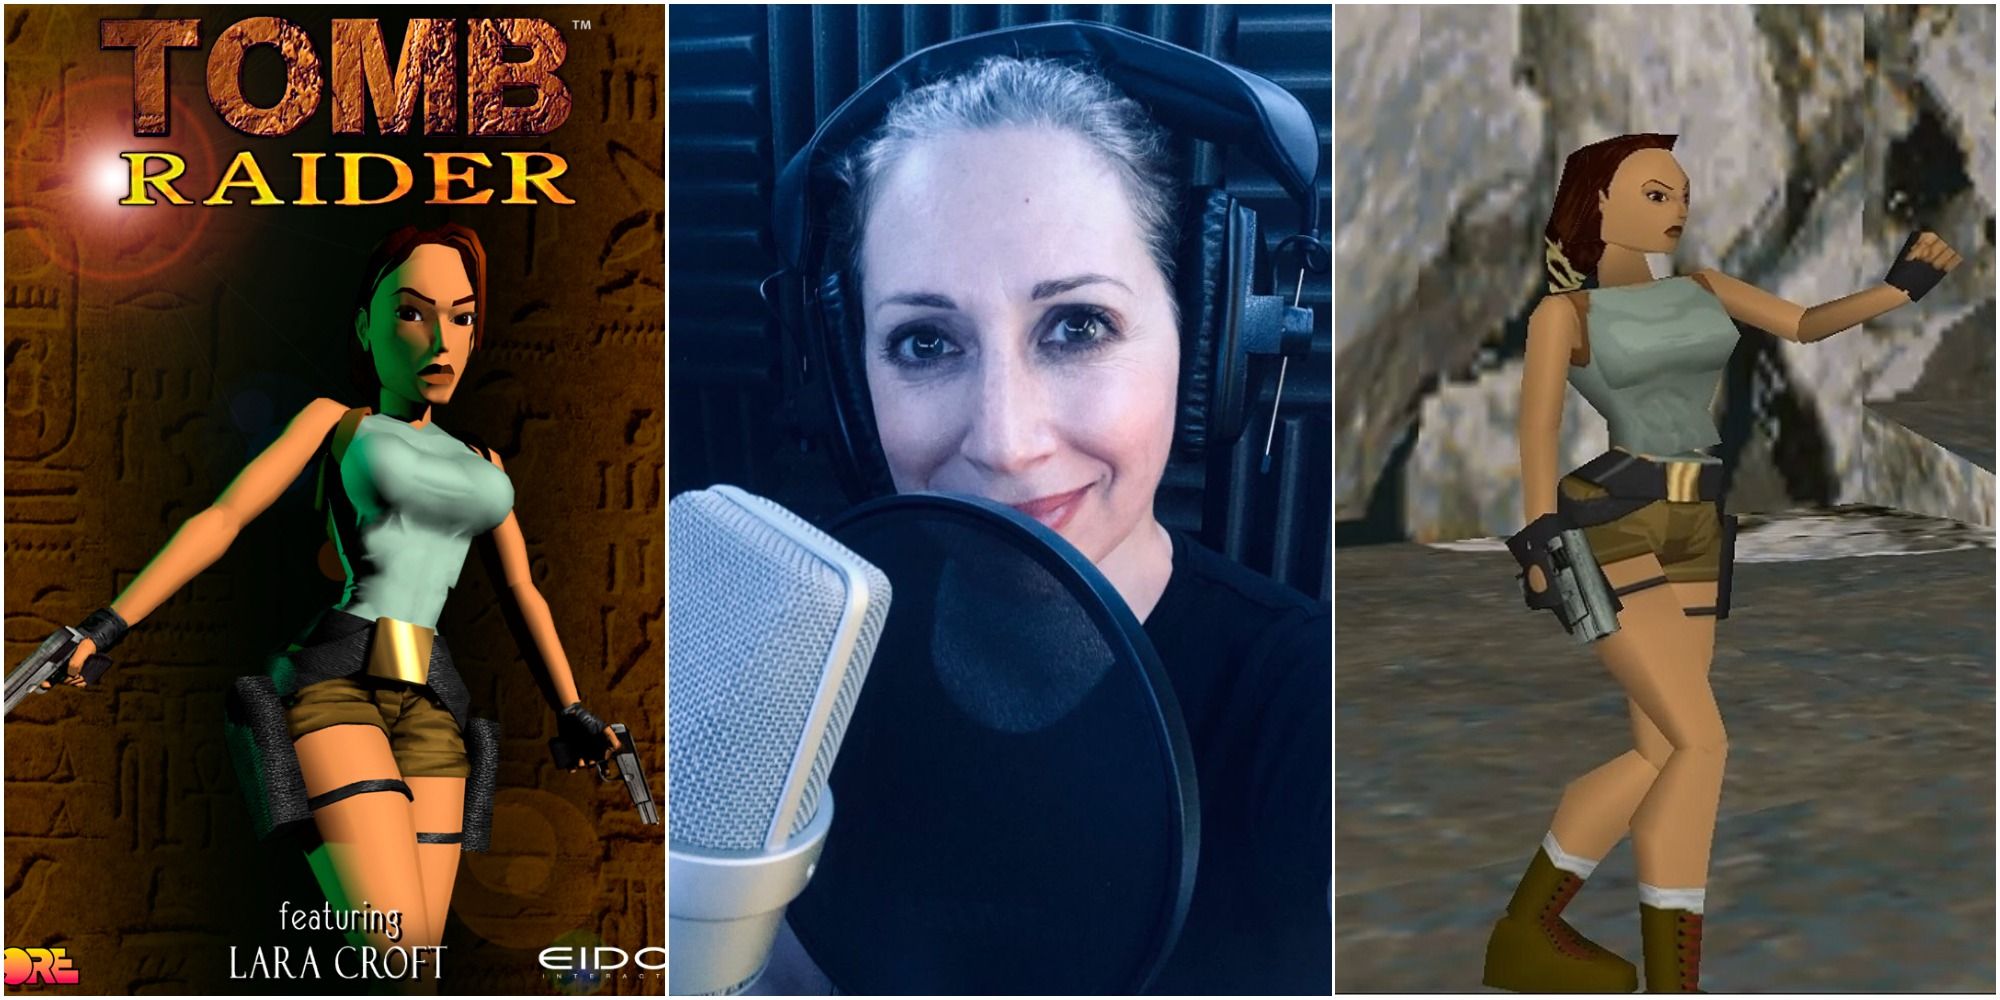 Shelley Blond as Lara Croft in Tomb Raider